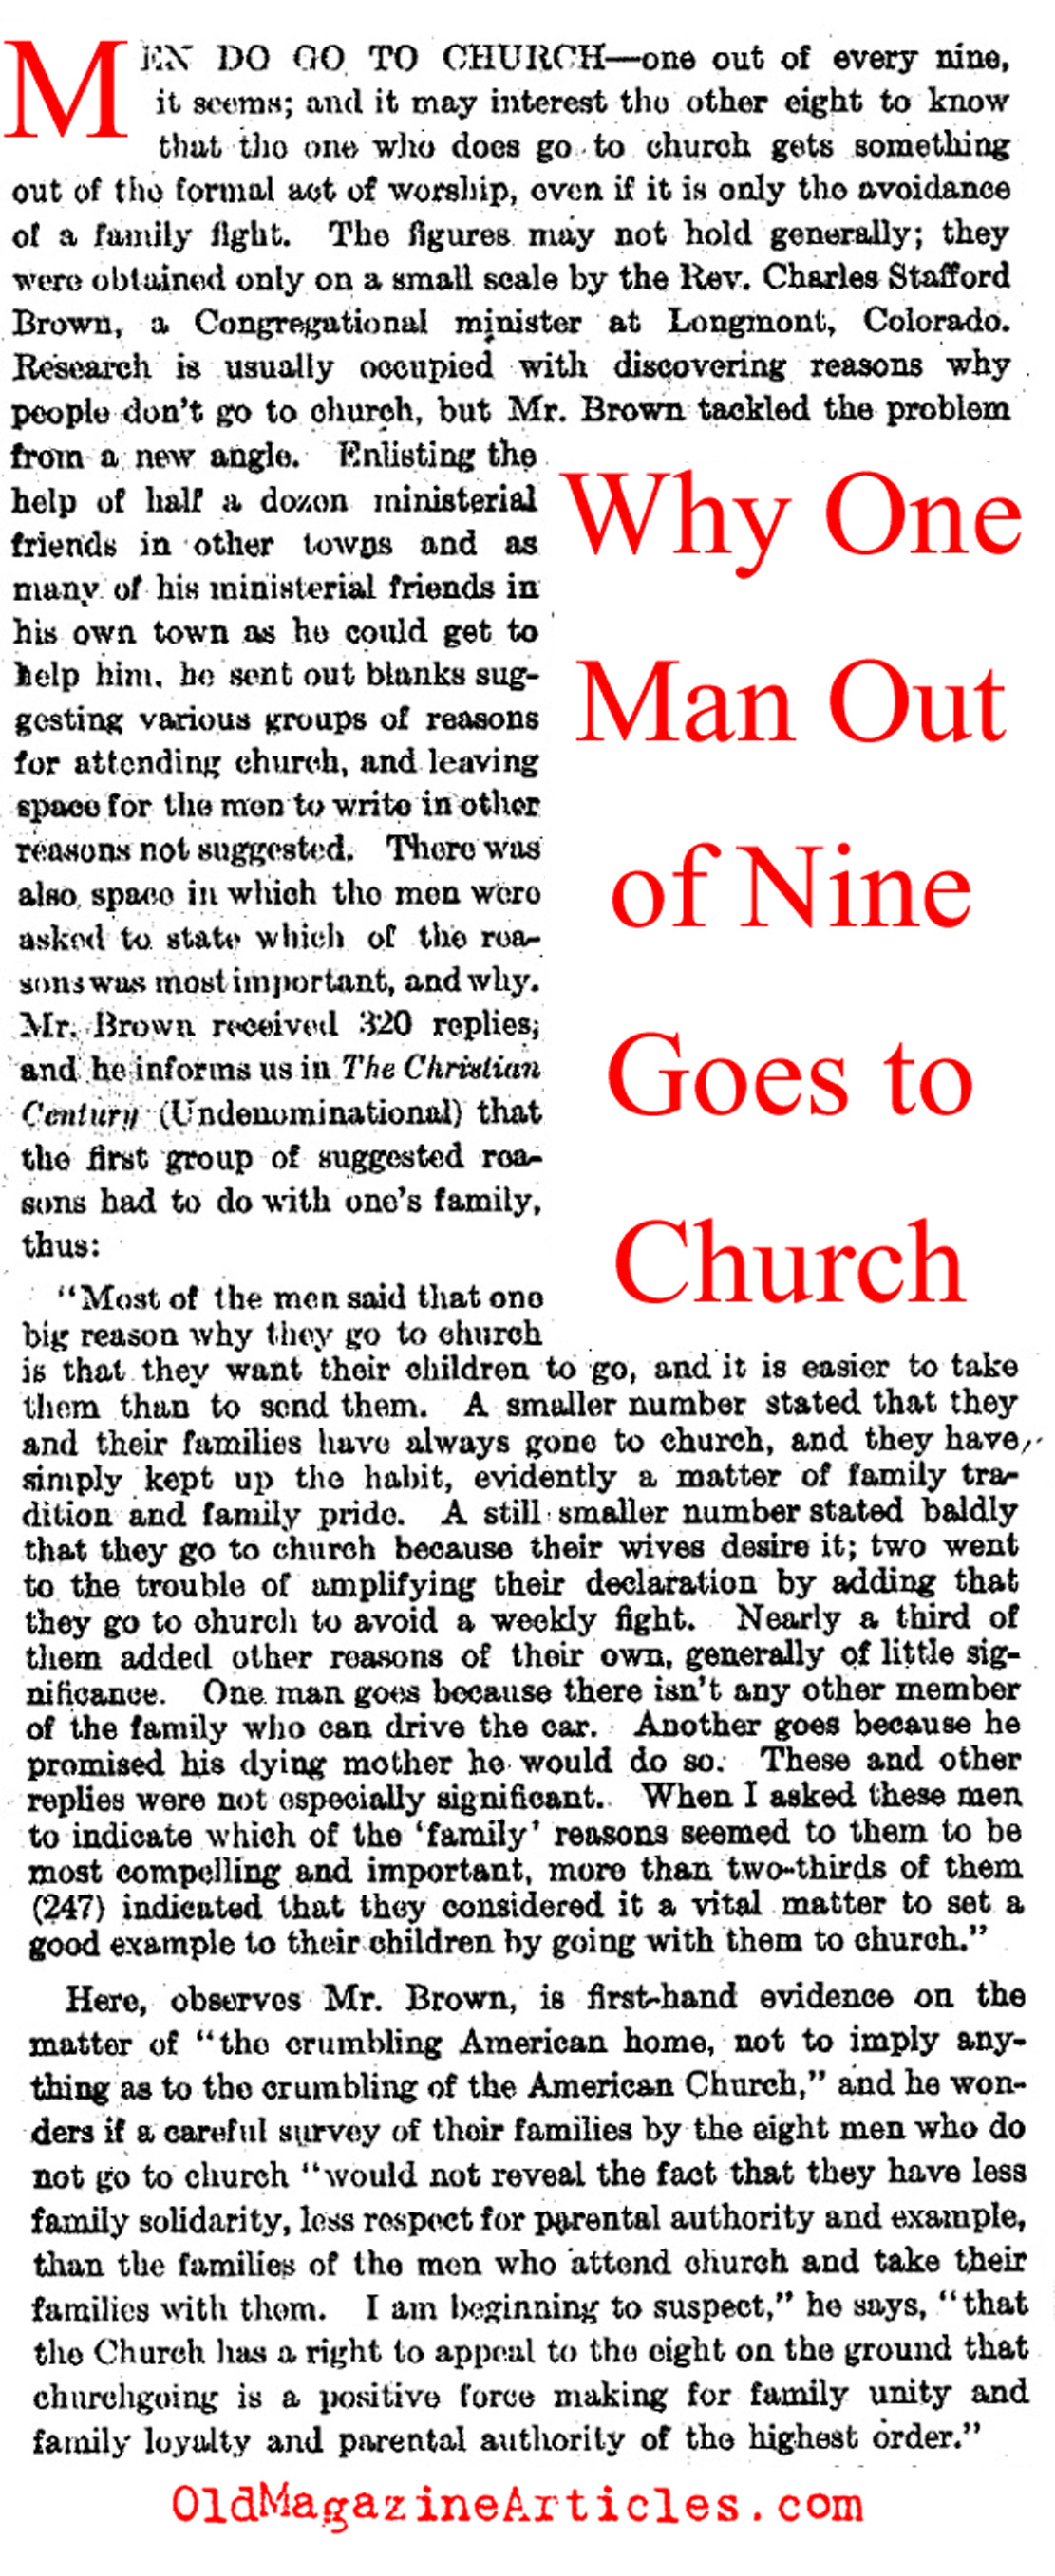 Male Church Attendance Drops (Literary Digest, 1929)